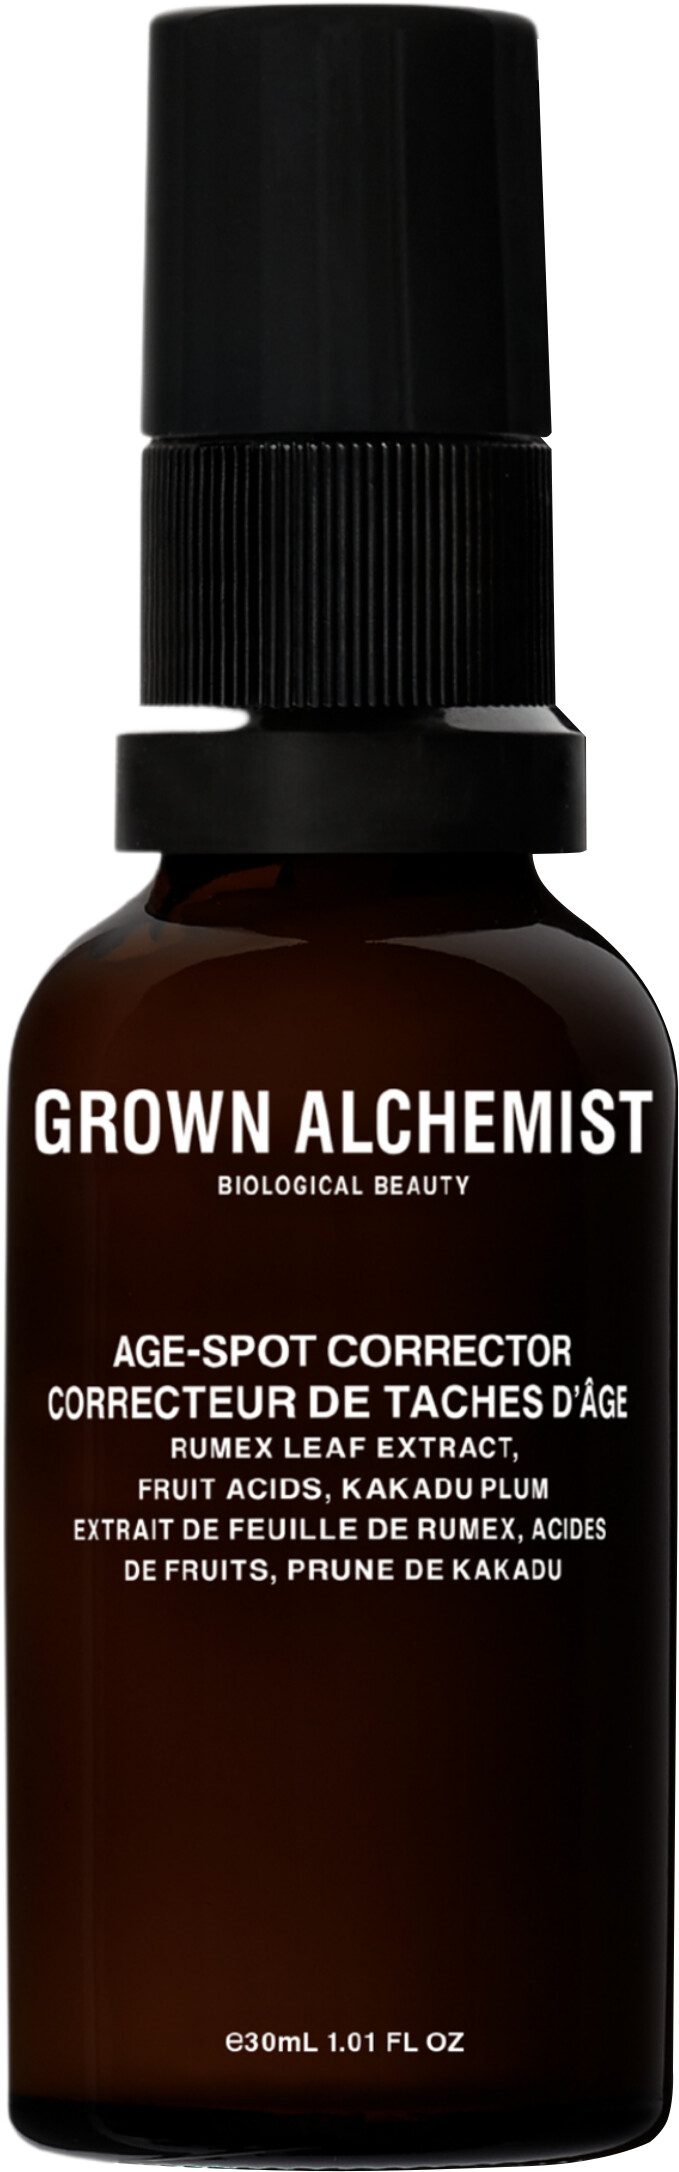 Grown Alchemist Age-Spot Corrector - Rumex Leaf Extract, Fruit Acids & Kakadu Plum 30ml